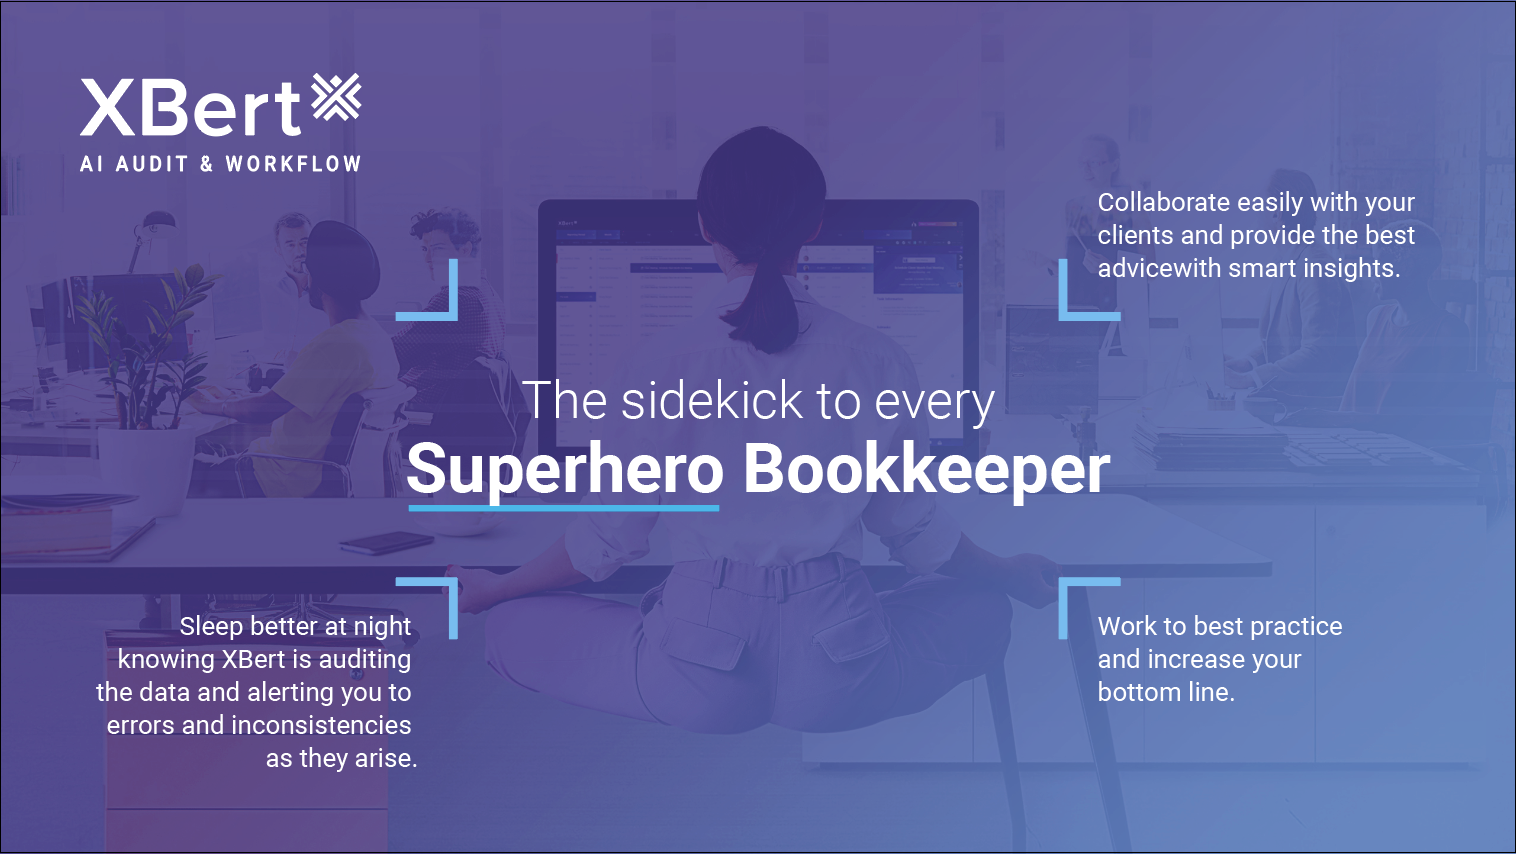 XBert: the sidekick to every superhero bookkeeper